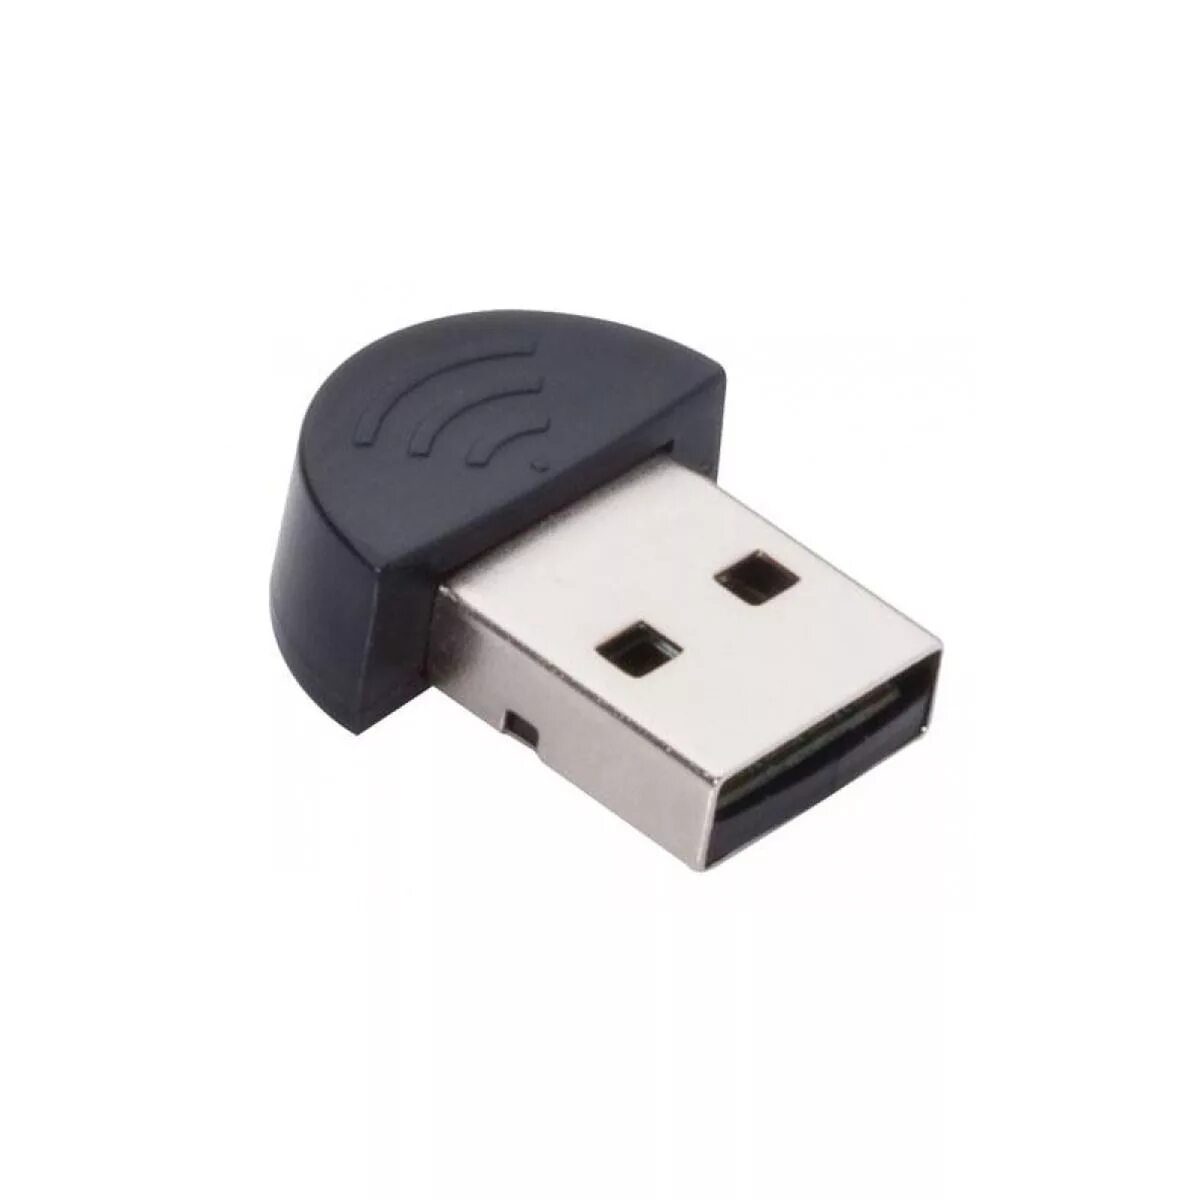 USB Dongle Bluetooth 5.0. Блютуз адаптер USB aux. Мини USB Bluetooth адаптер v 2,0. Блютус USB aux блютуз адаптер. Купить bluetooth флешку